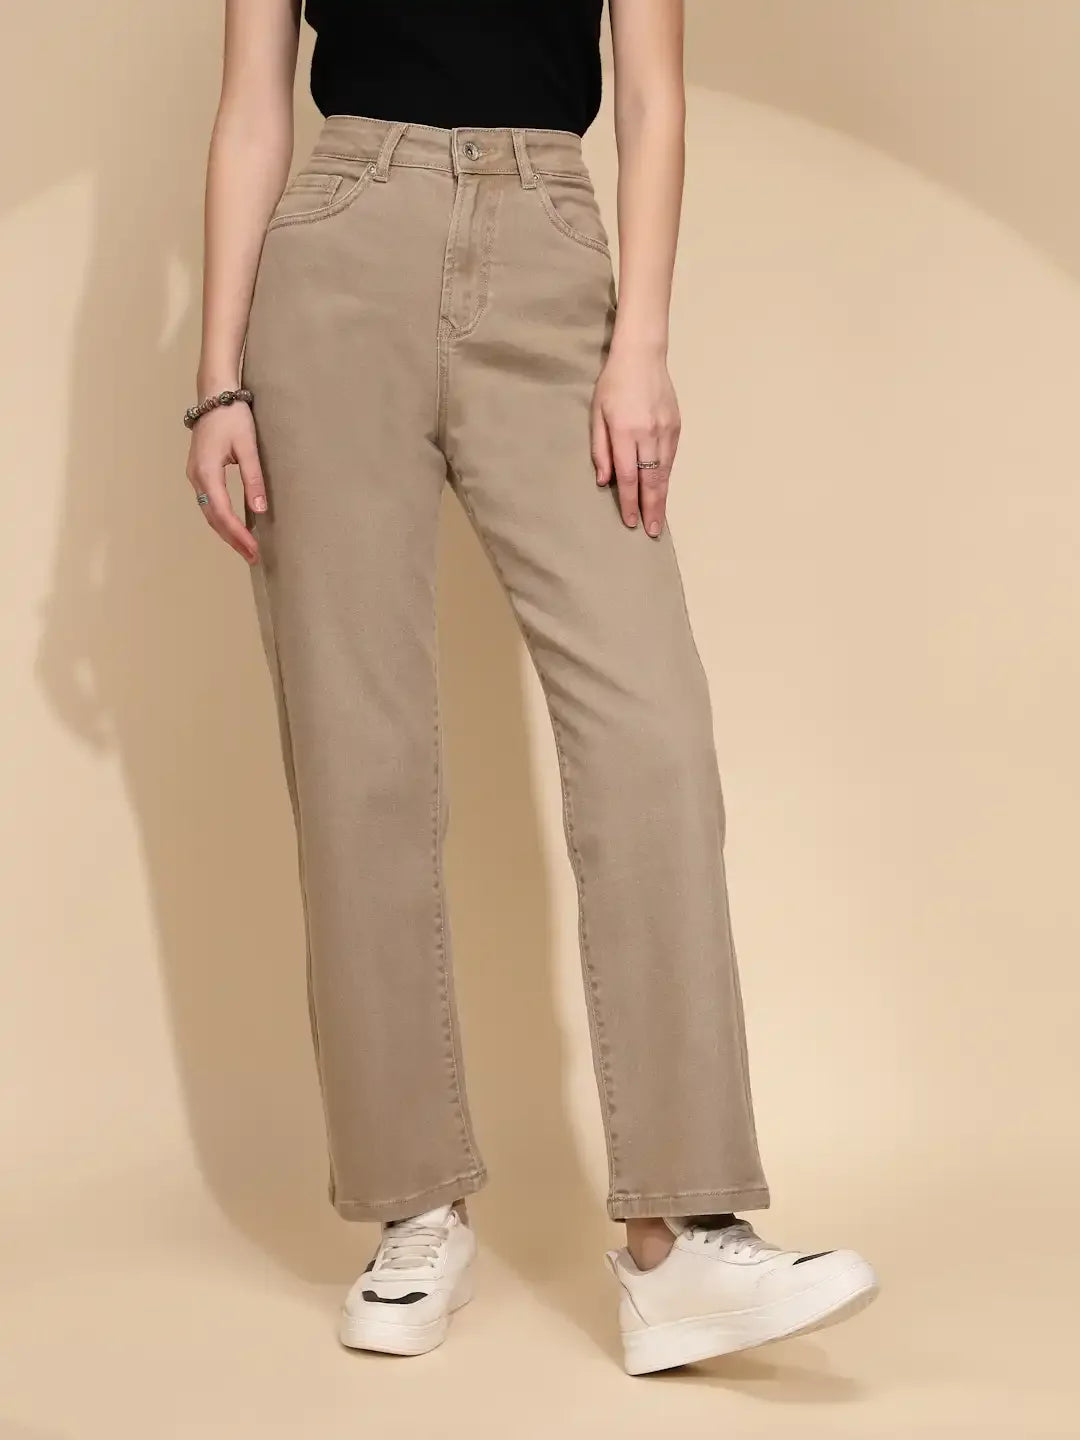 Khaki Cotton Straight Slim Fit Jeans For Women